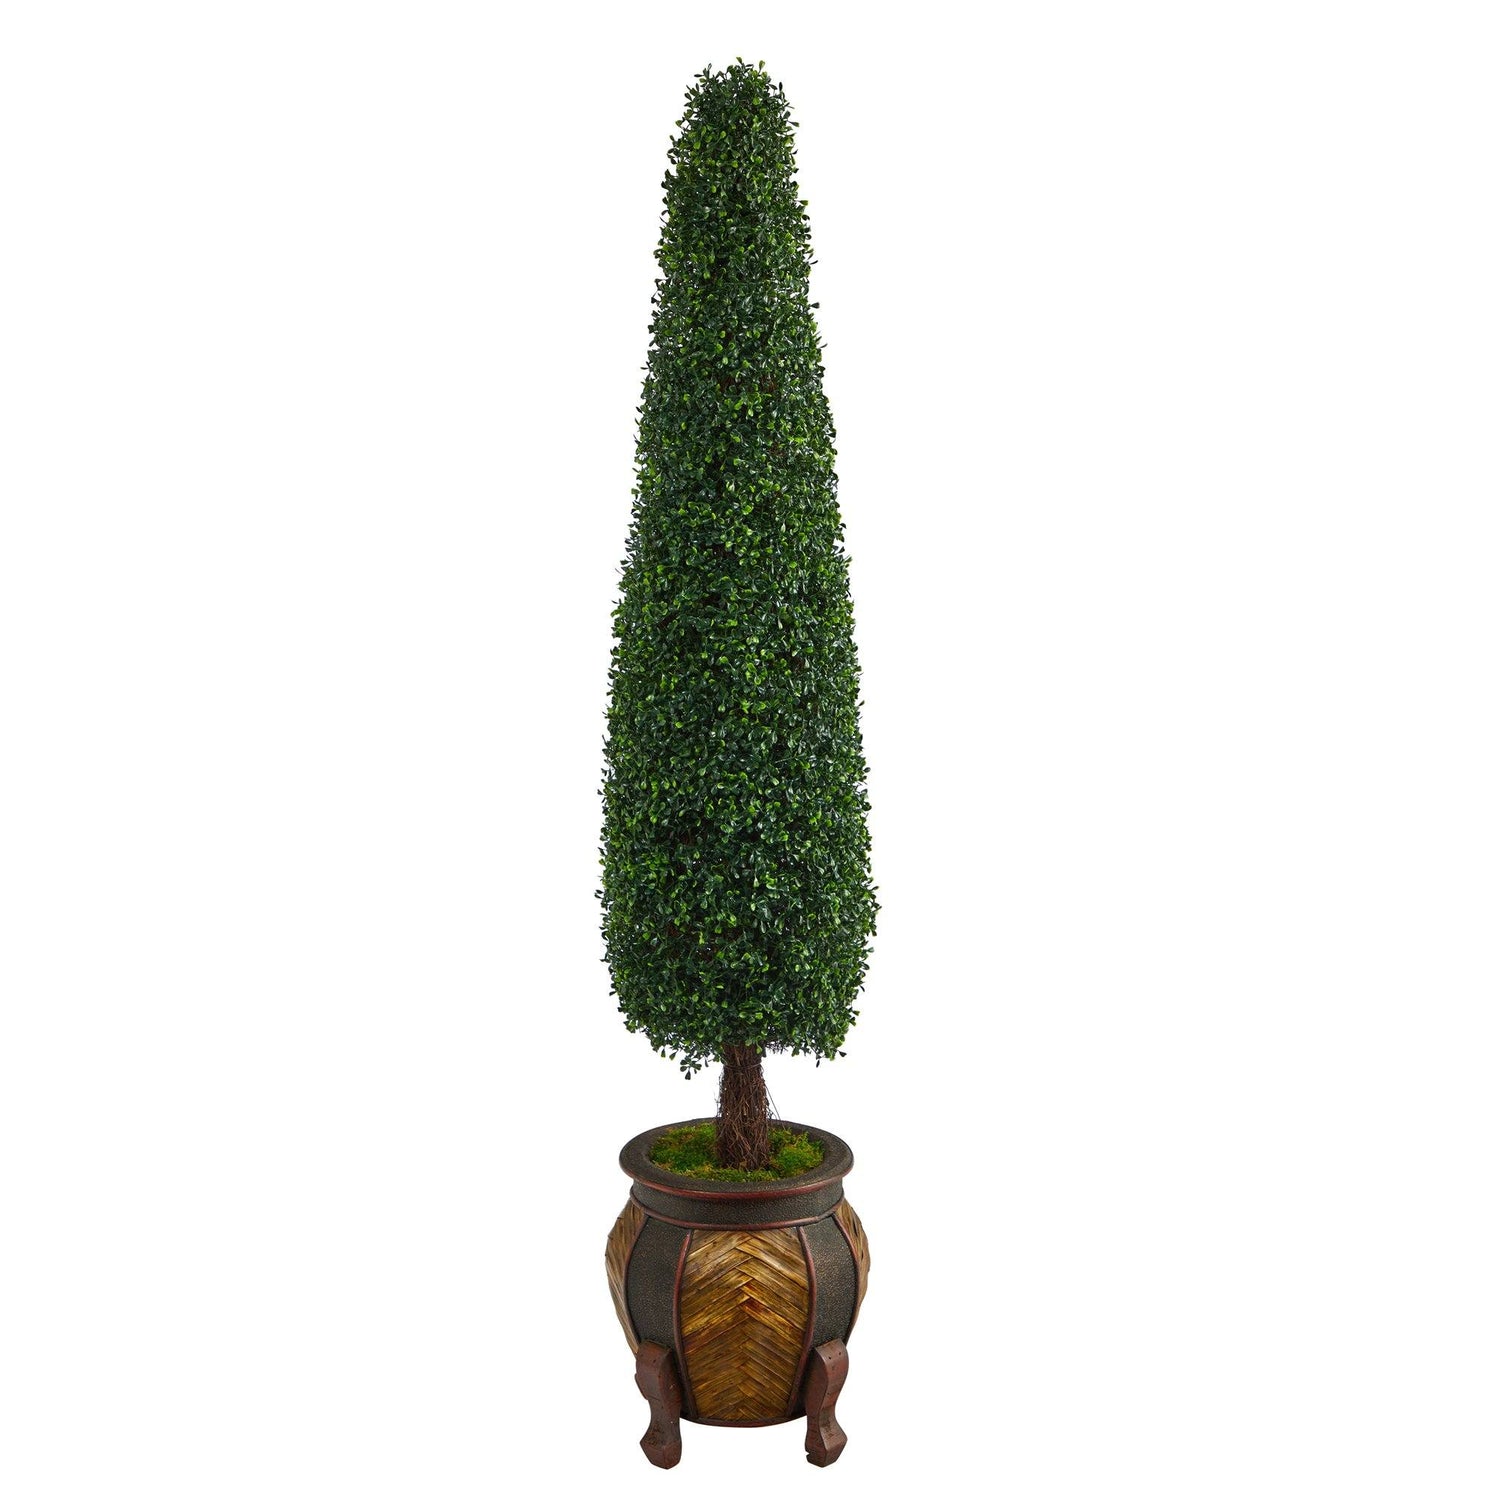 5.5’ Boxwood Topiary Artificial Tree in Decorative Planter (Indoor/Outdoor)